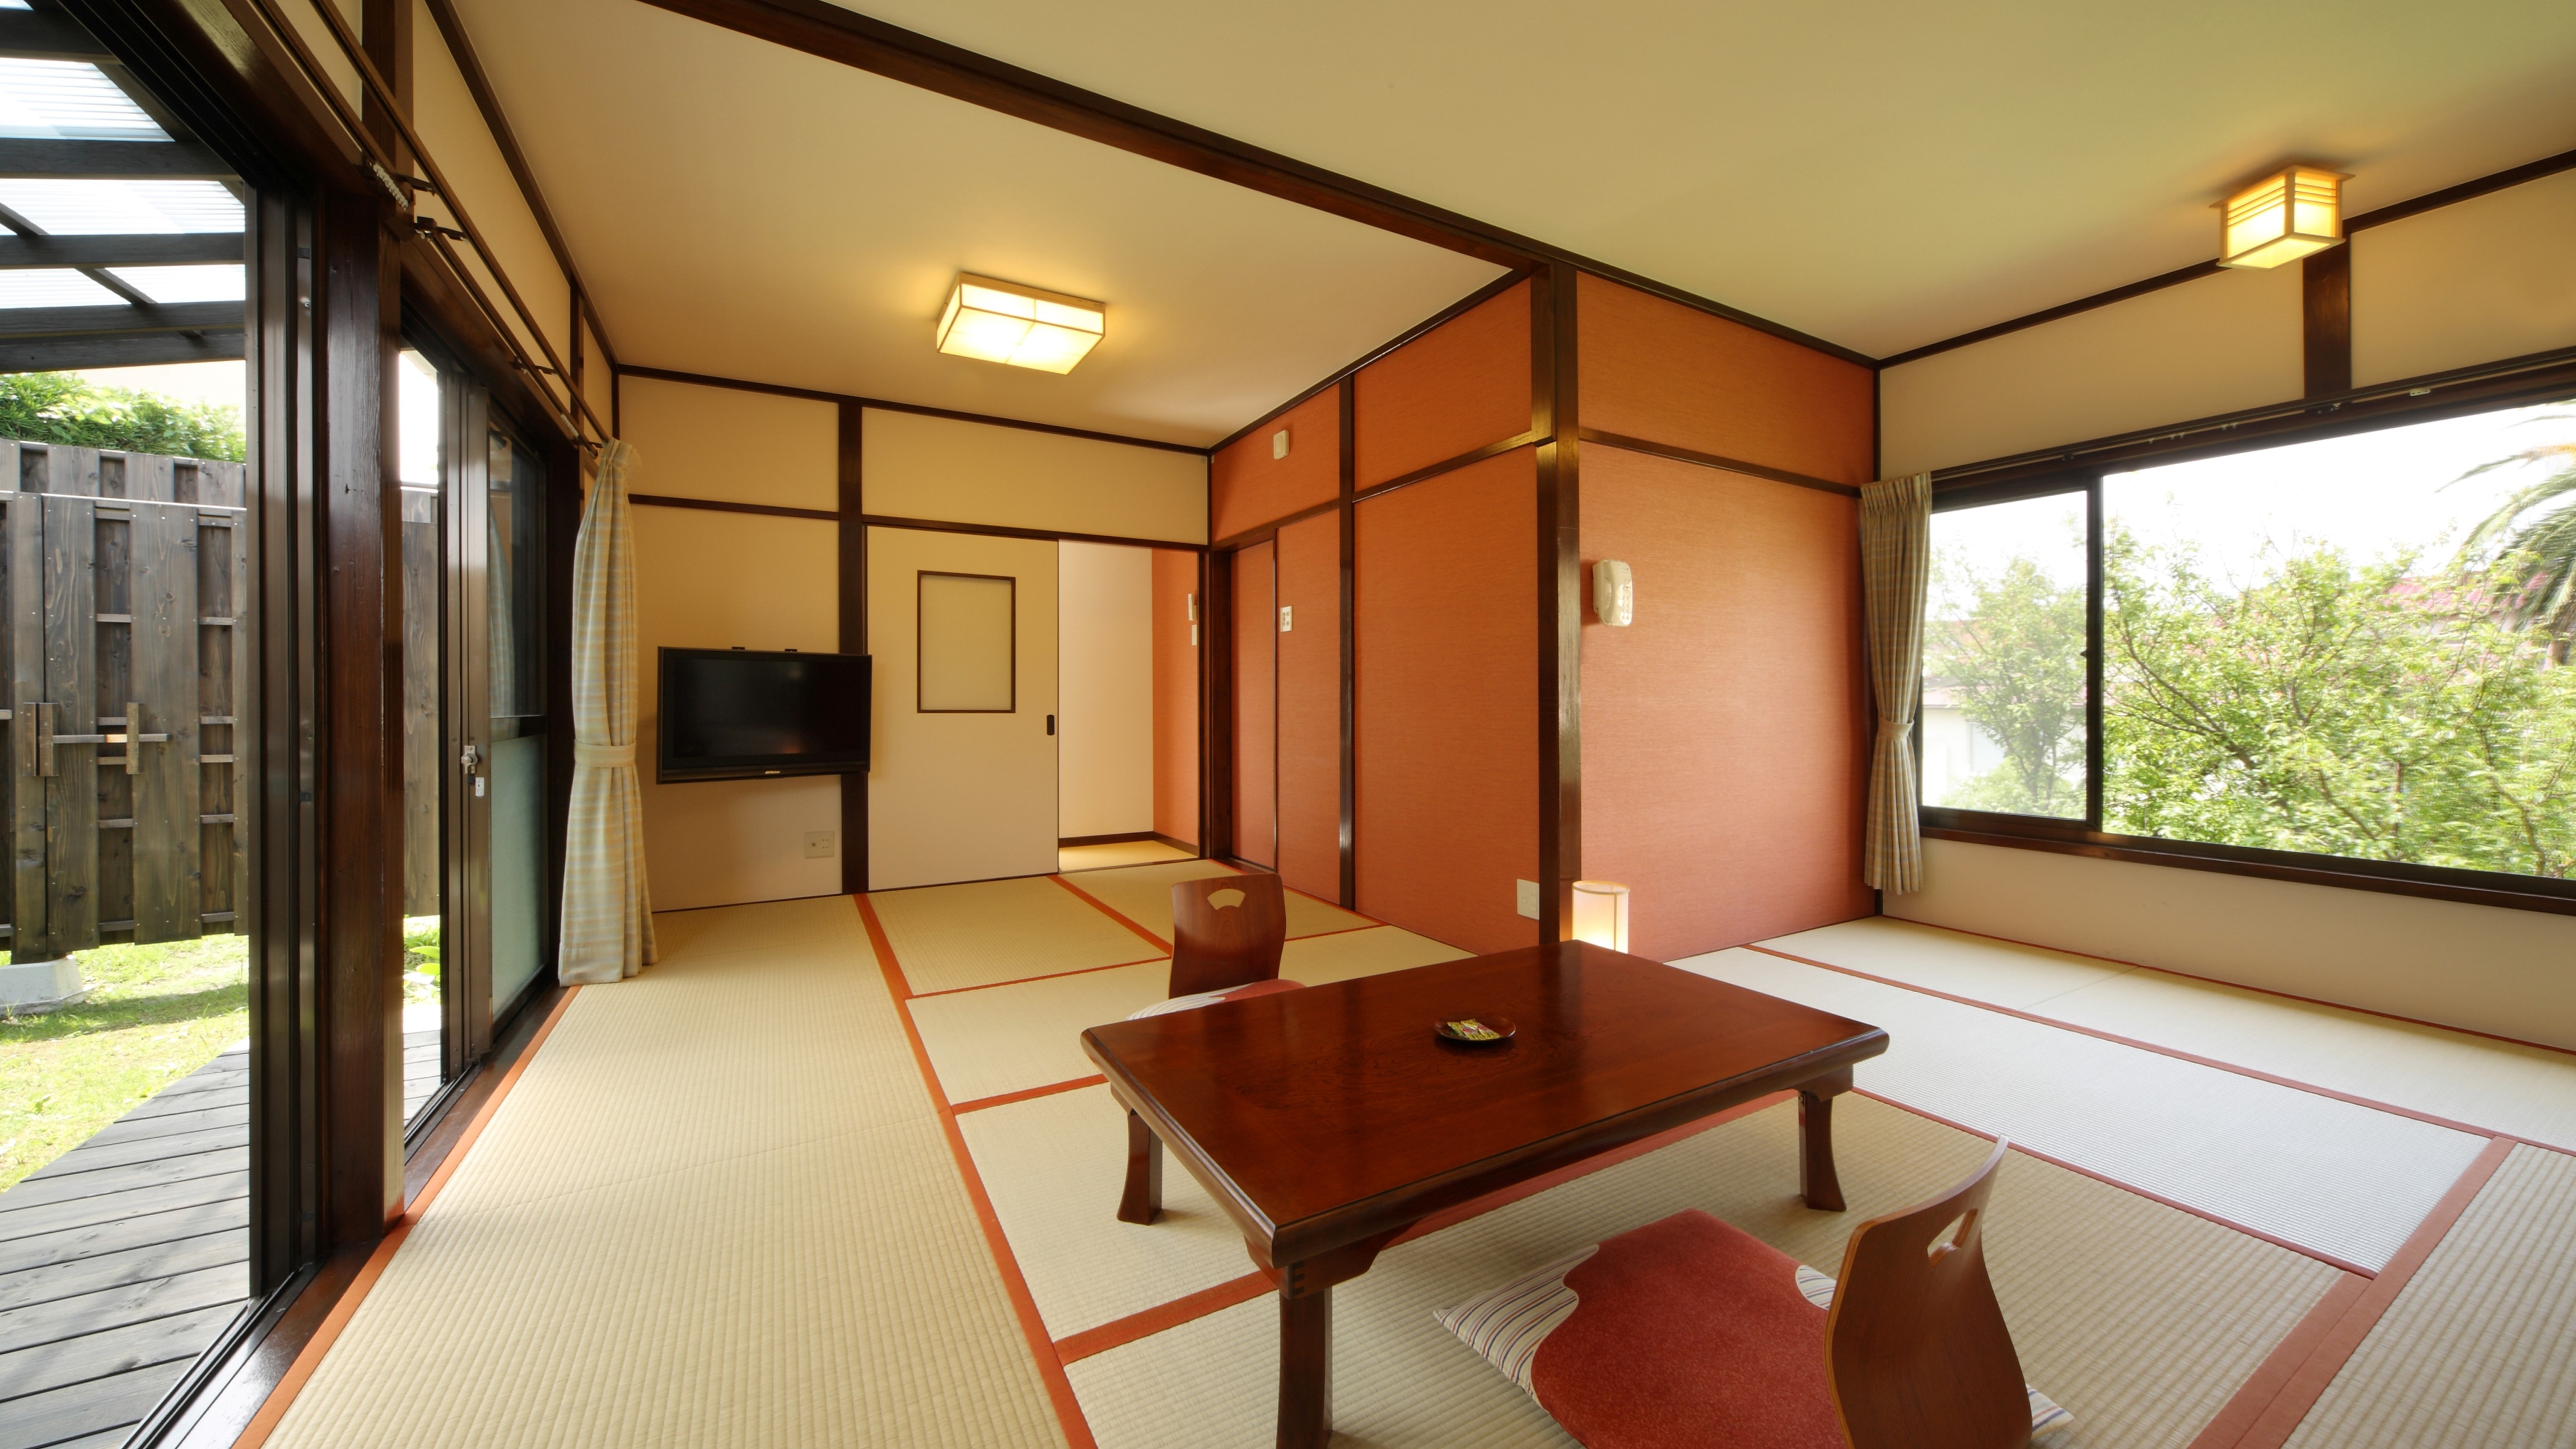 Kamar terpisah bergaya Jepang 12 tikar tatami Contoh: Wallpaper bervariasi tergantung ruangan